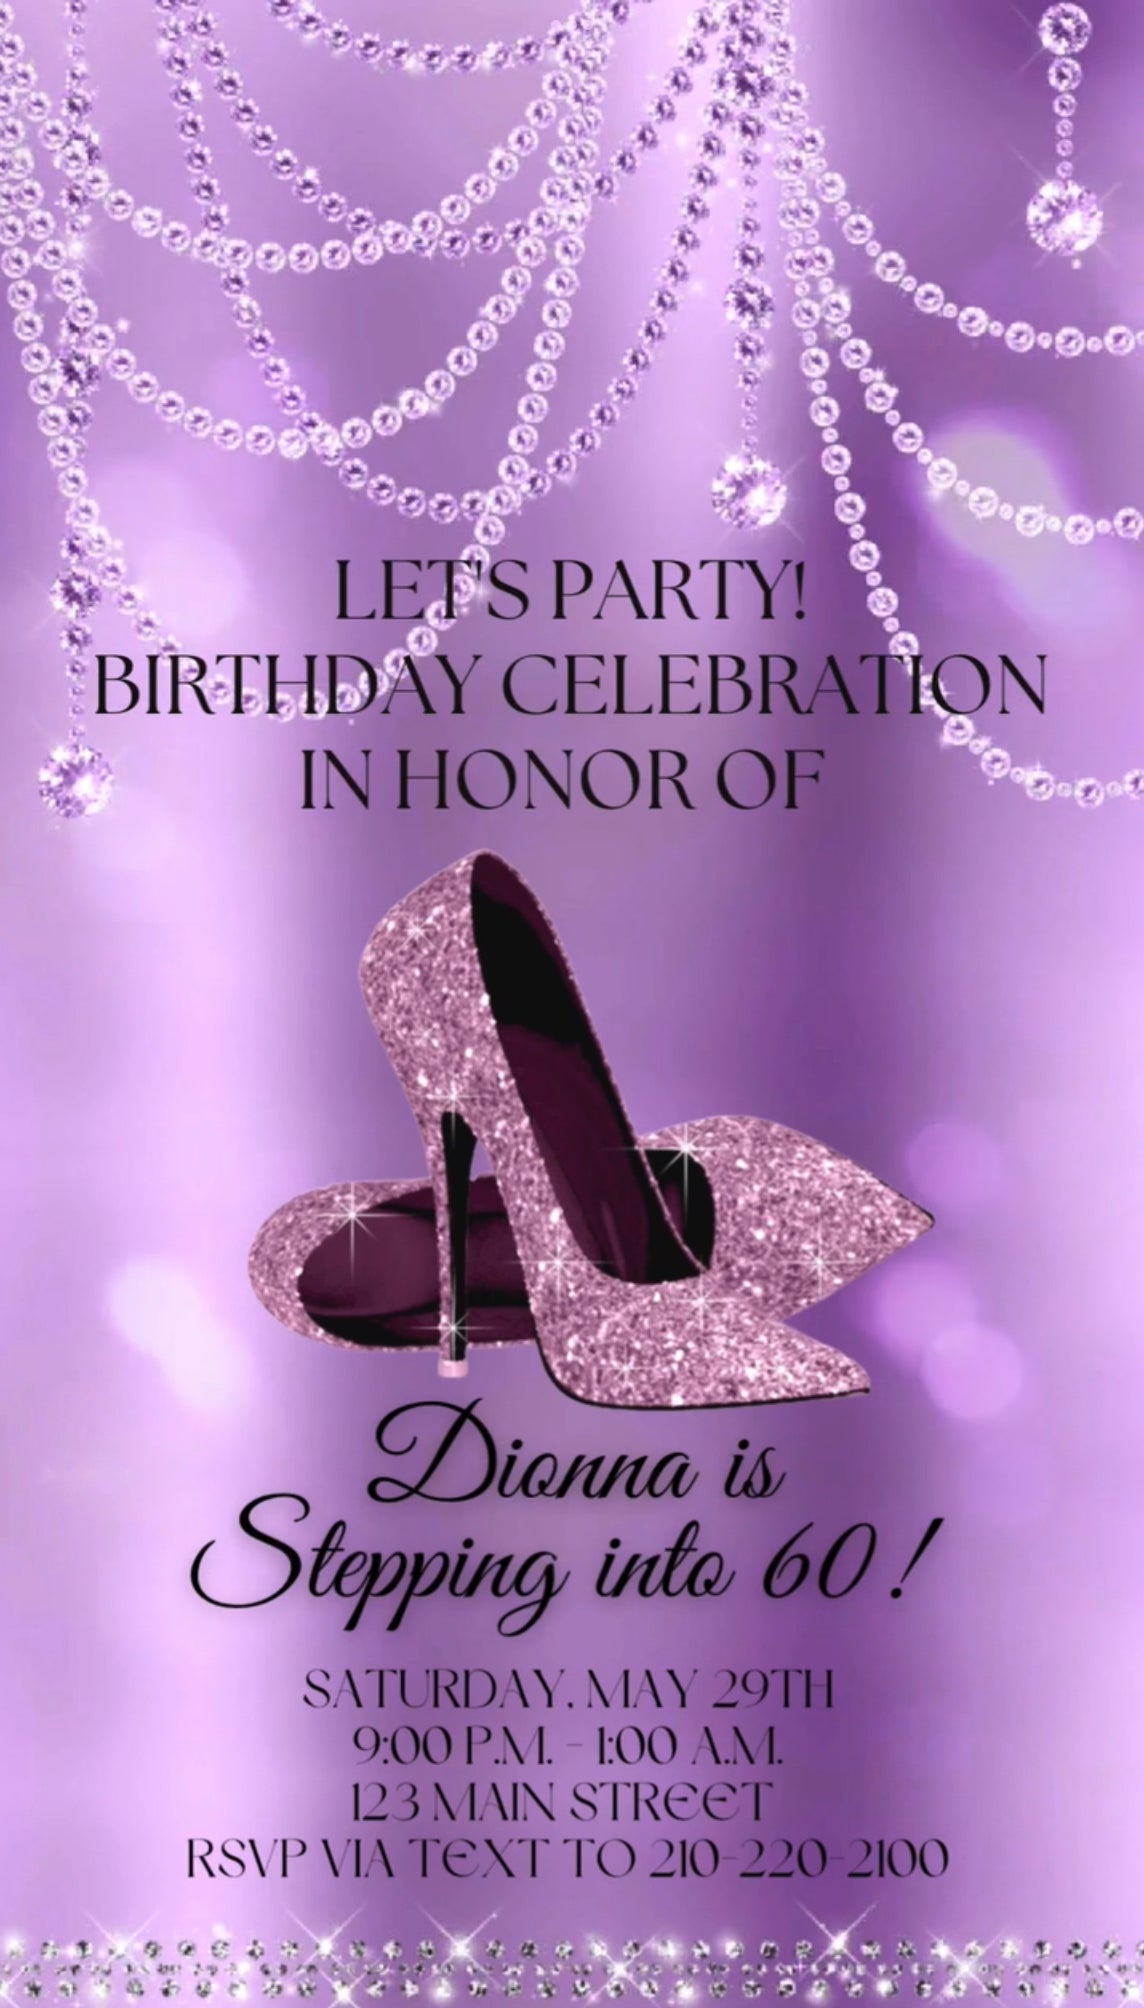 Pearl and Heels Video Invitation, Purple Glitter Glam Diamond Shoes Customized Digital Invite